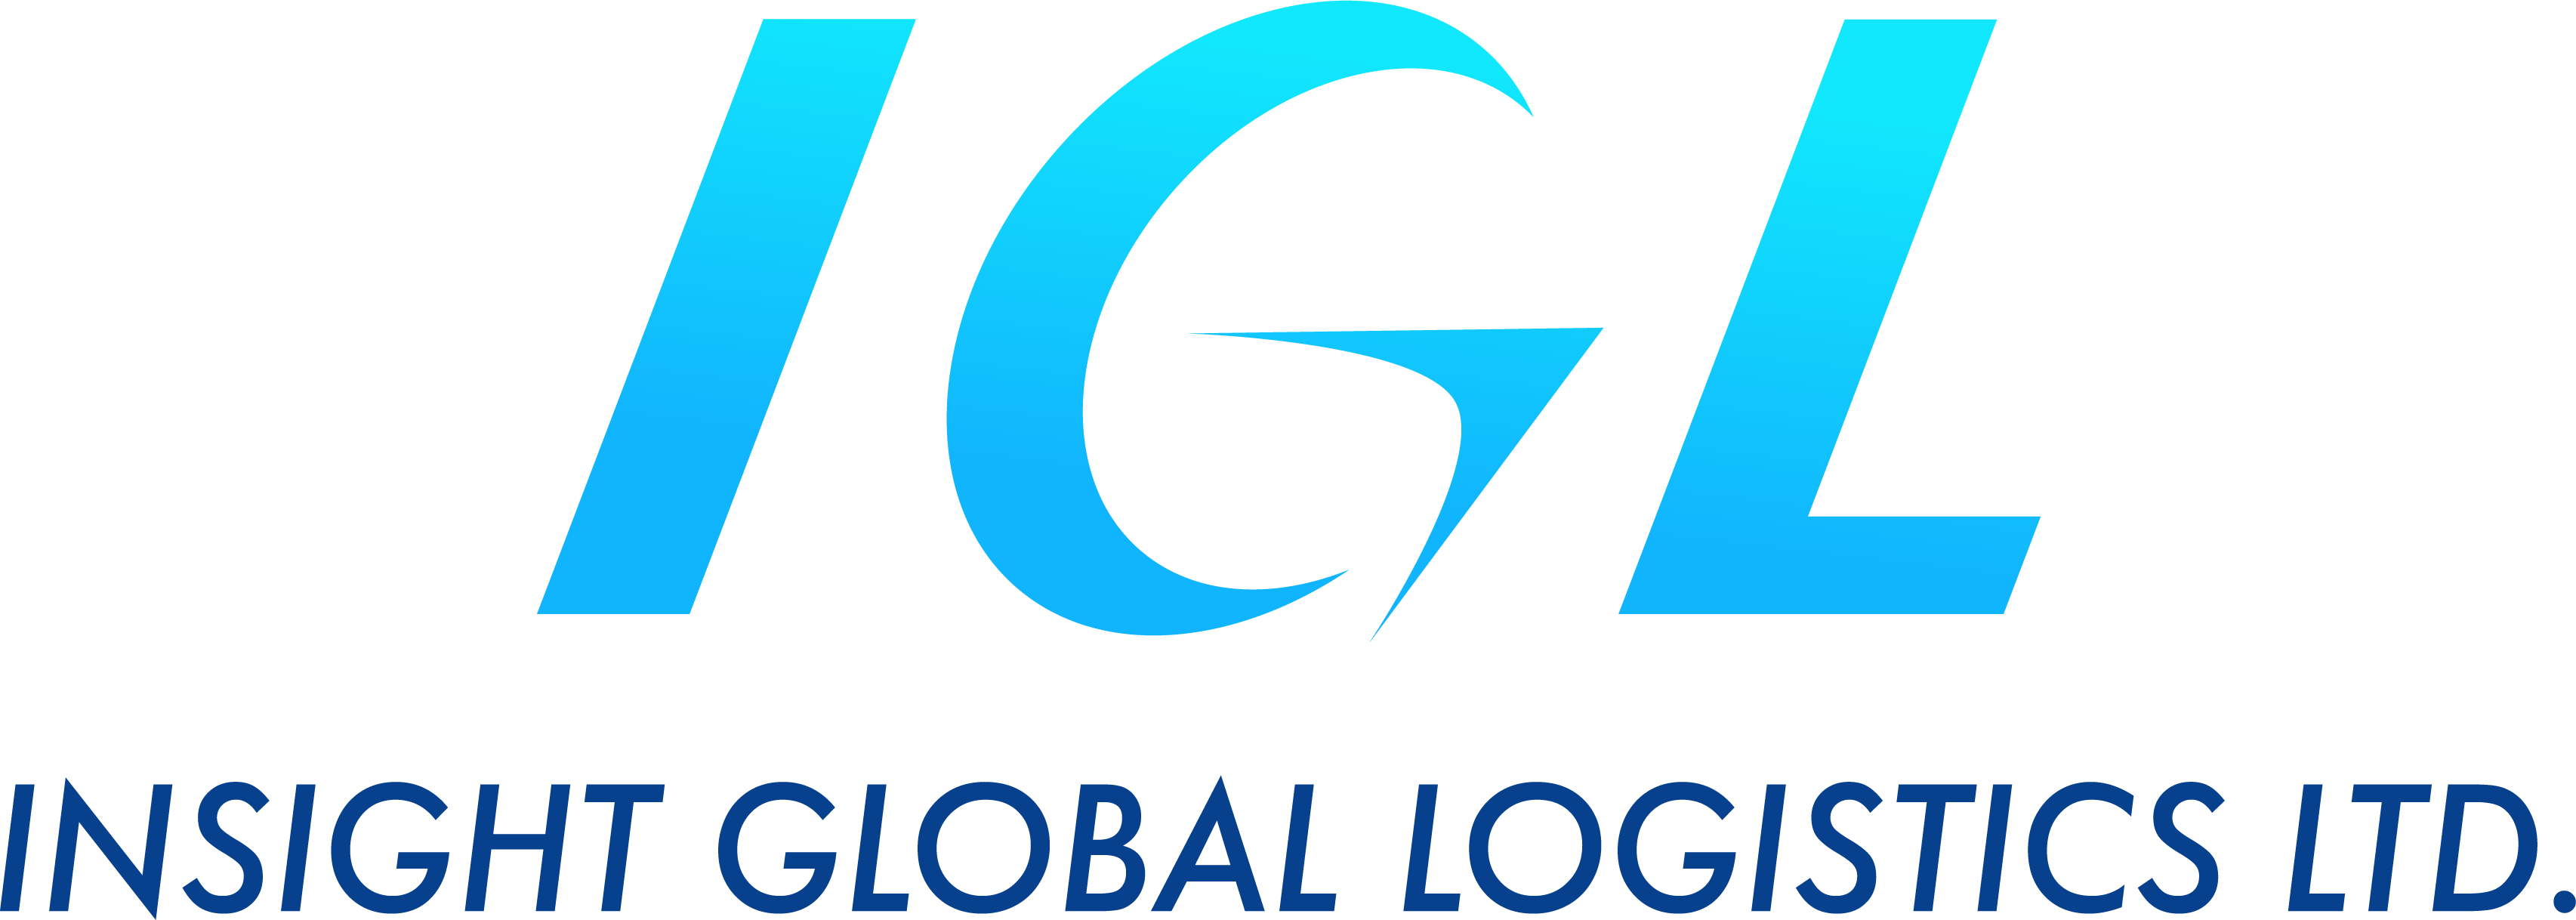 Insight Global Logistics